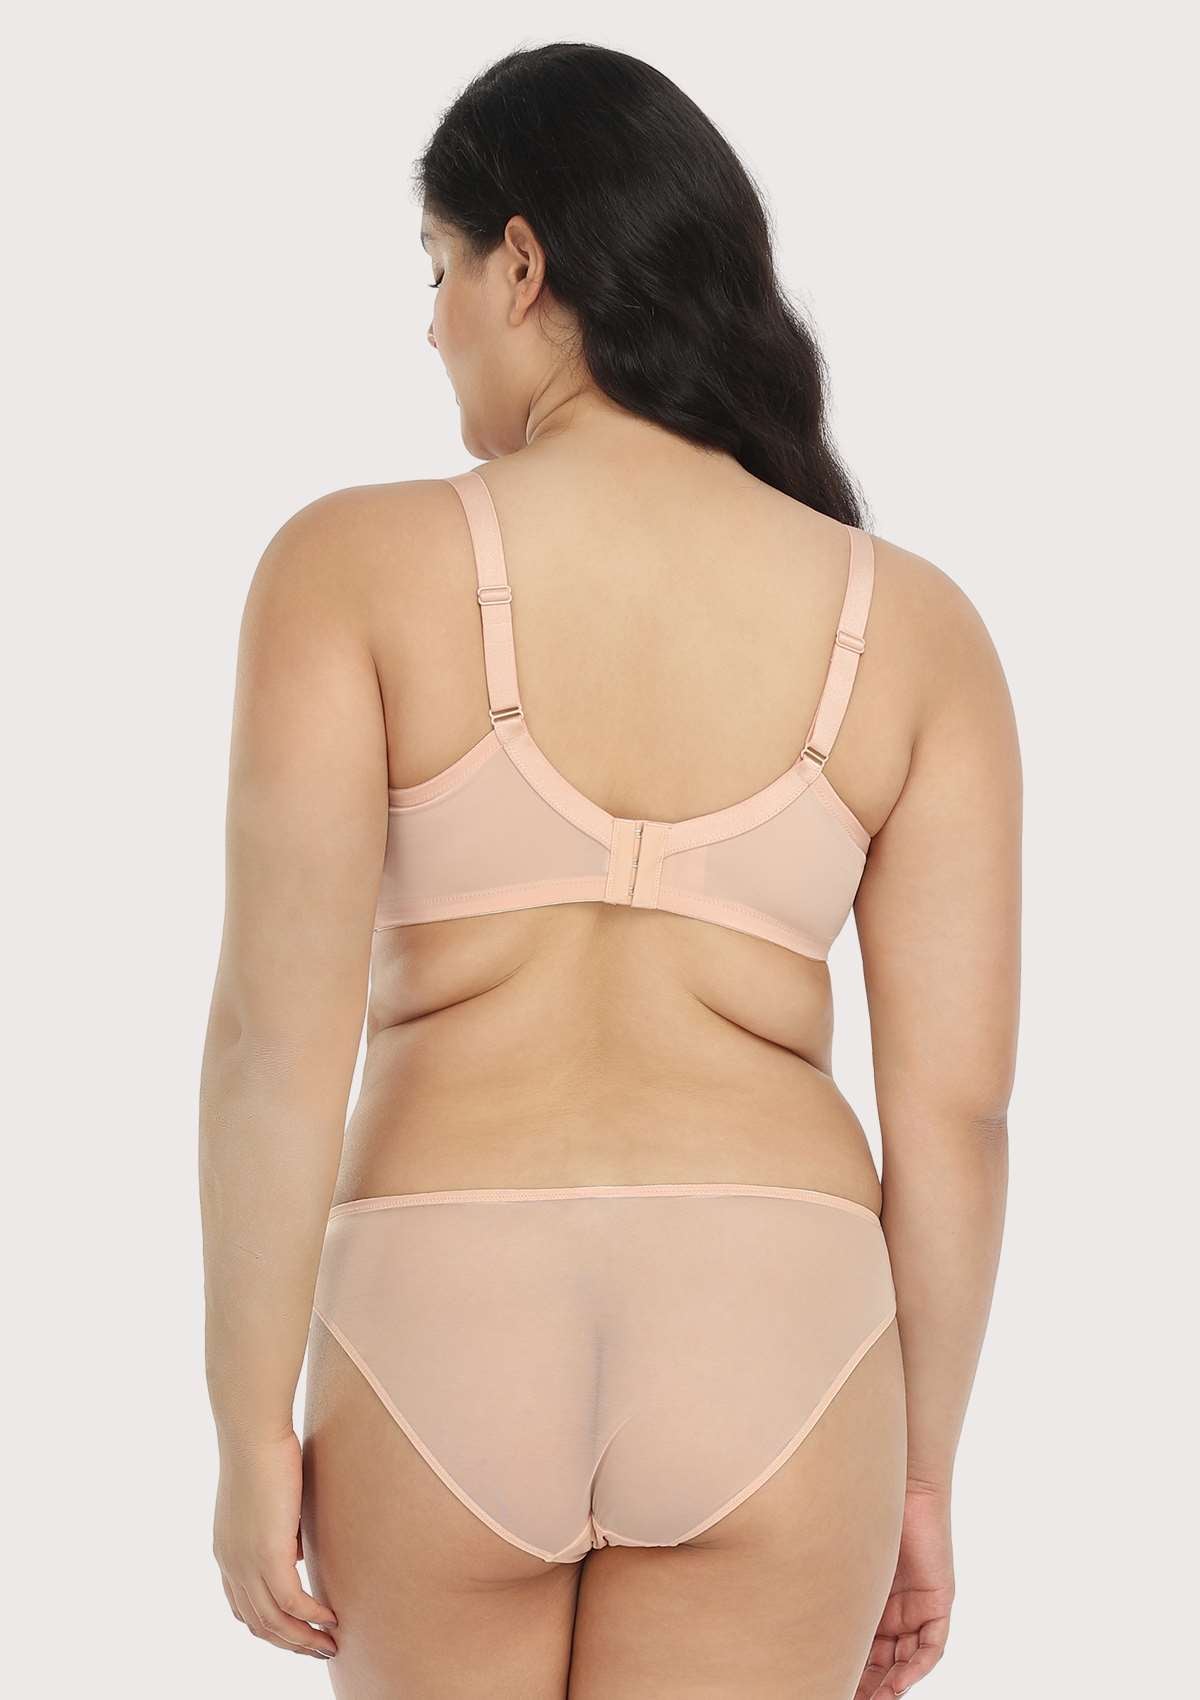 HSIA Sunflower Matching Bra And Panties Set: Comfortable Plus Size Bra - Pink / 38 / DD/E